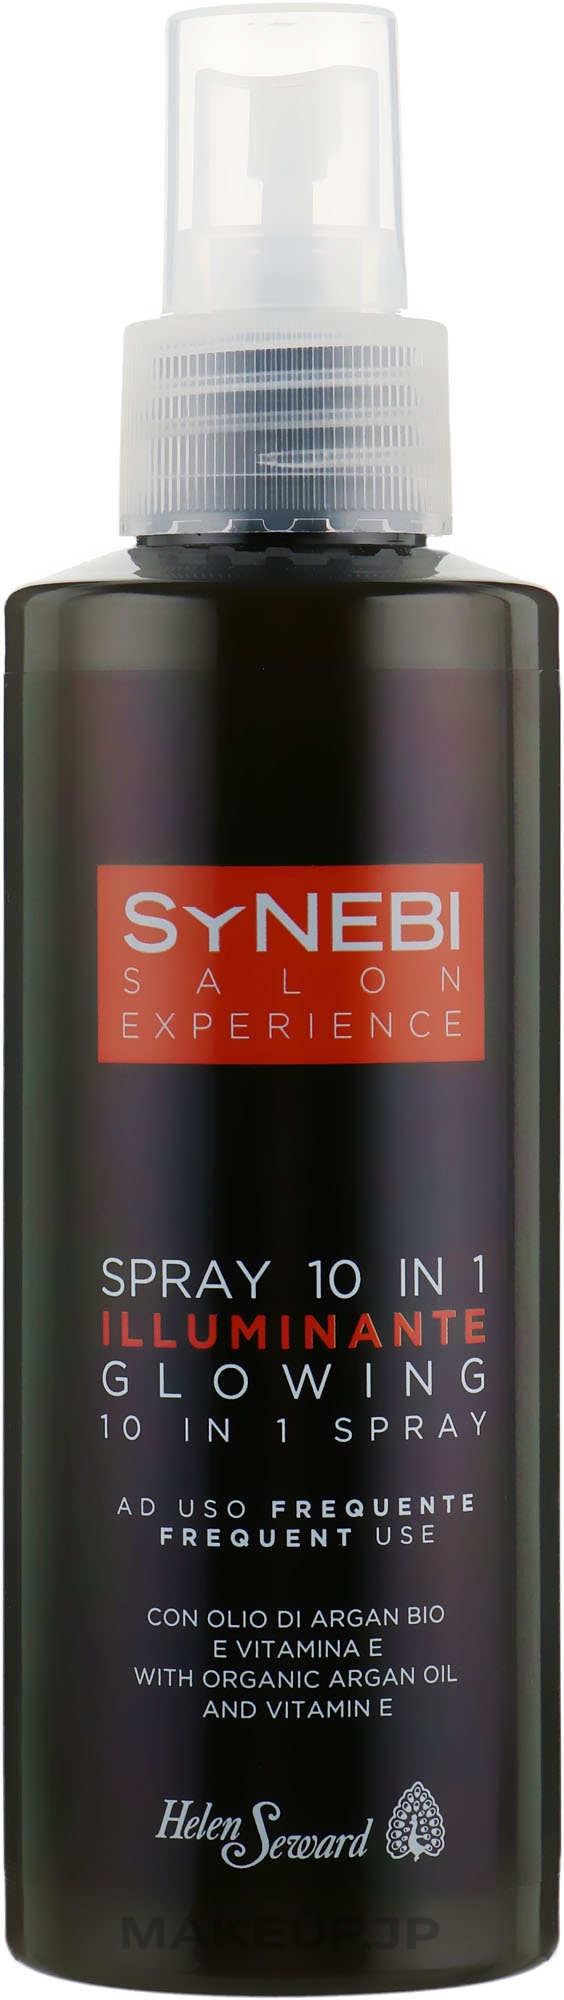 10in1 Lightening Spray for Frequent Use - Helen Seward Spray — photo 150 ml